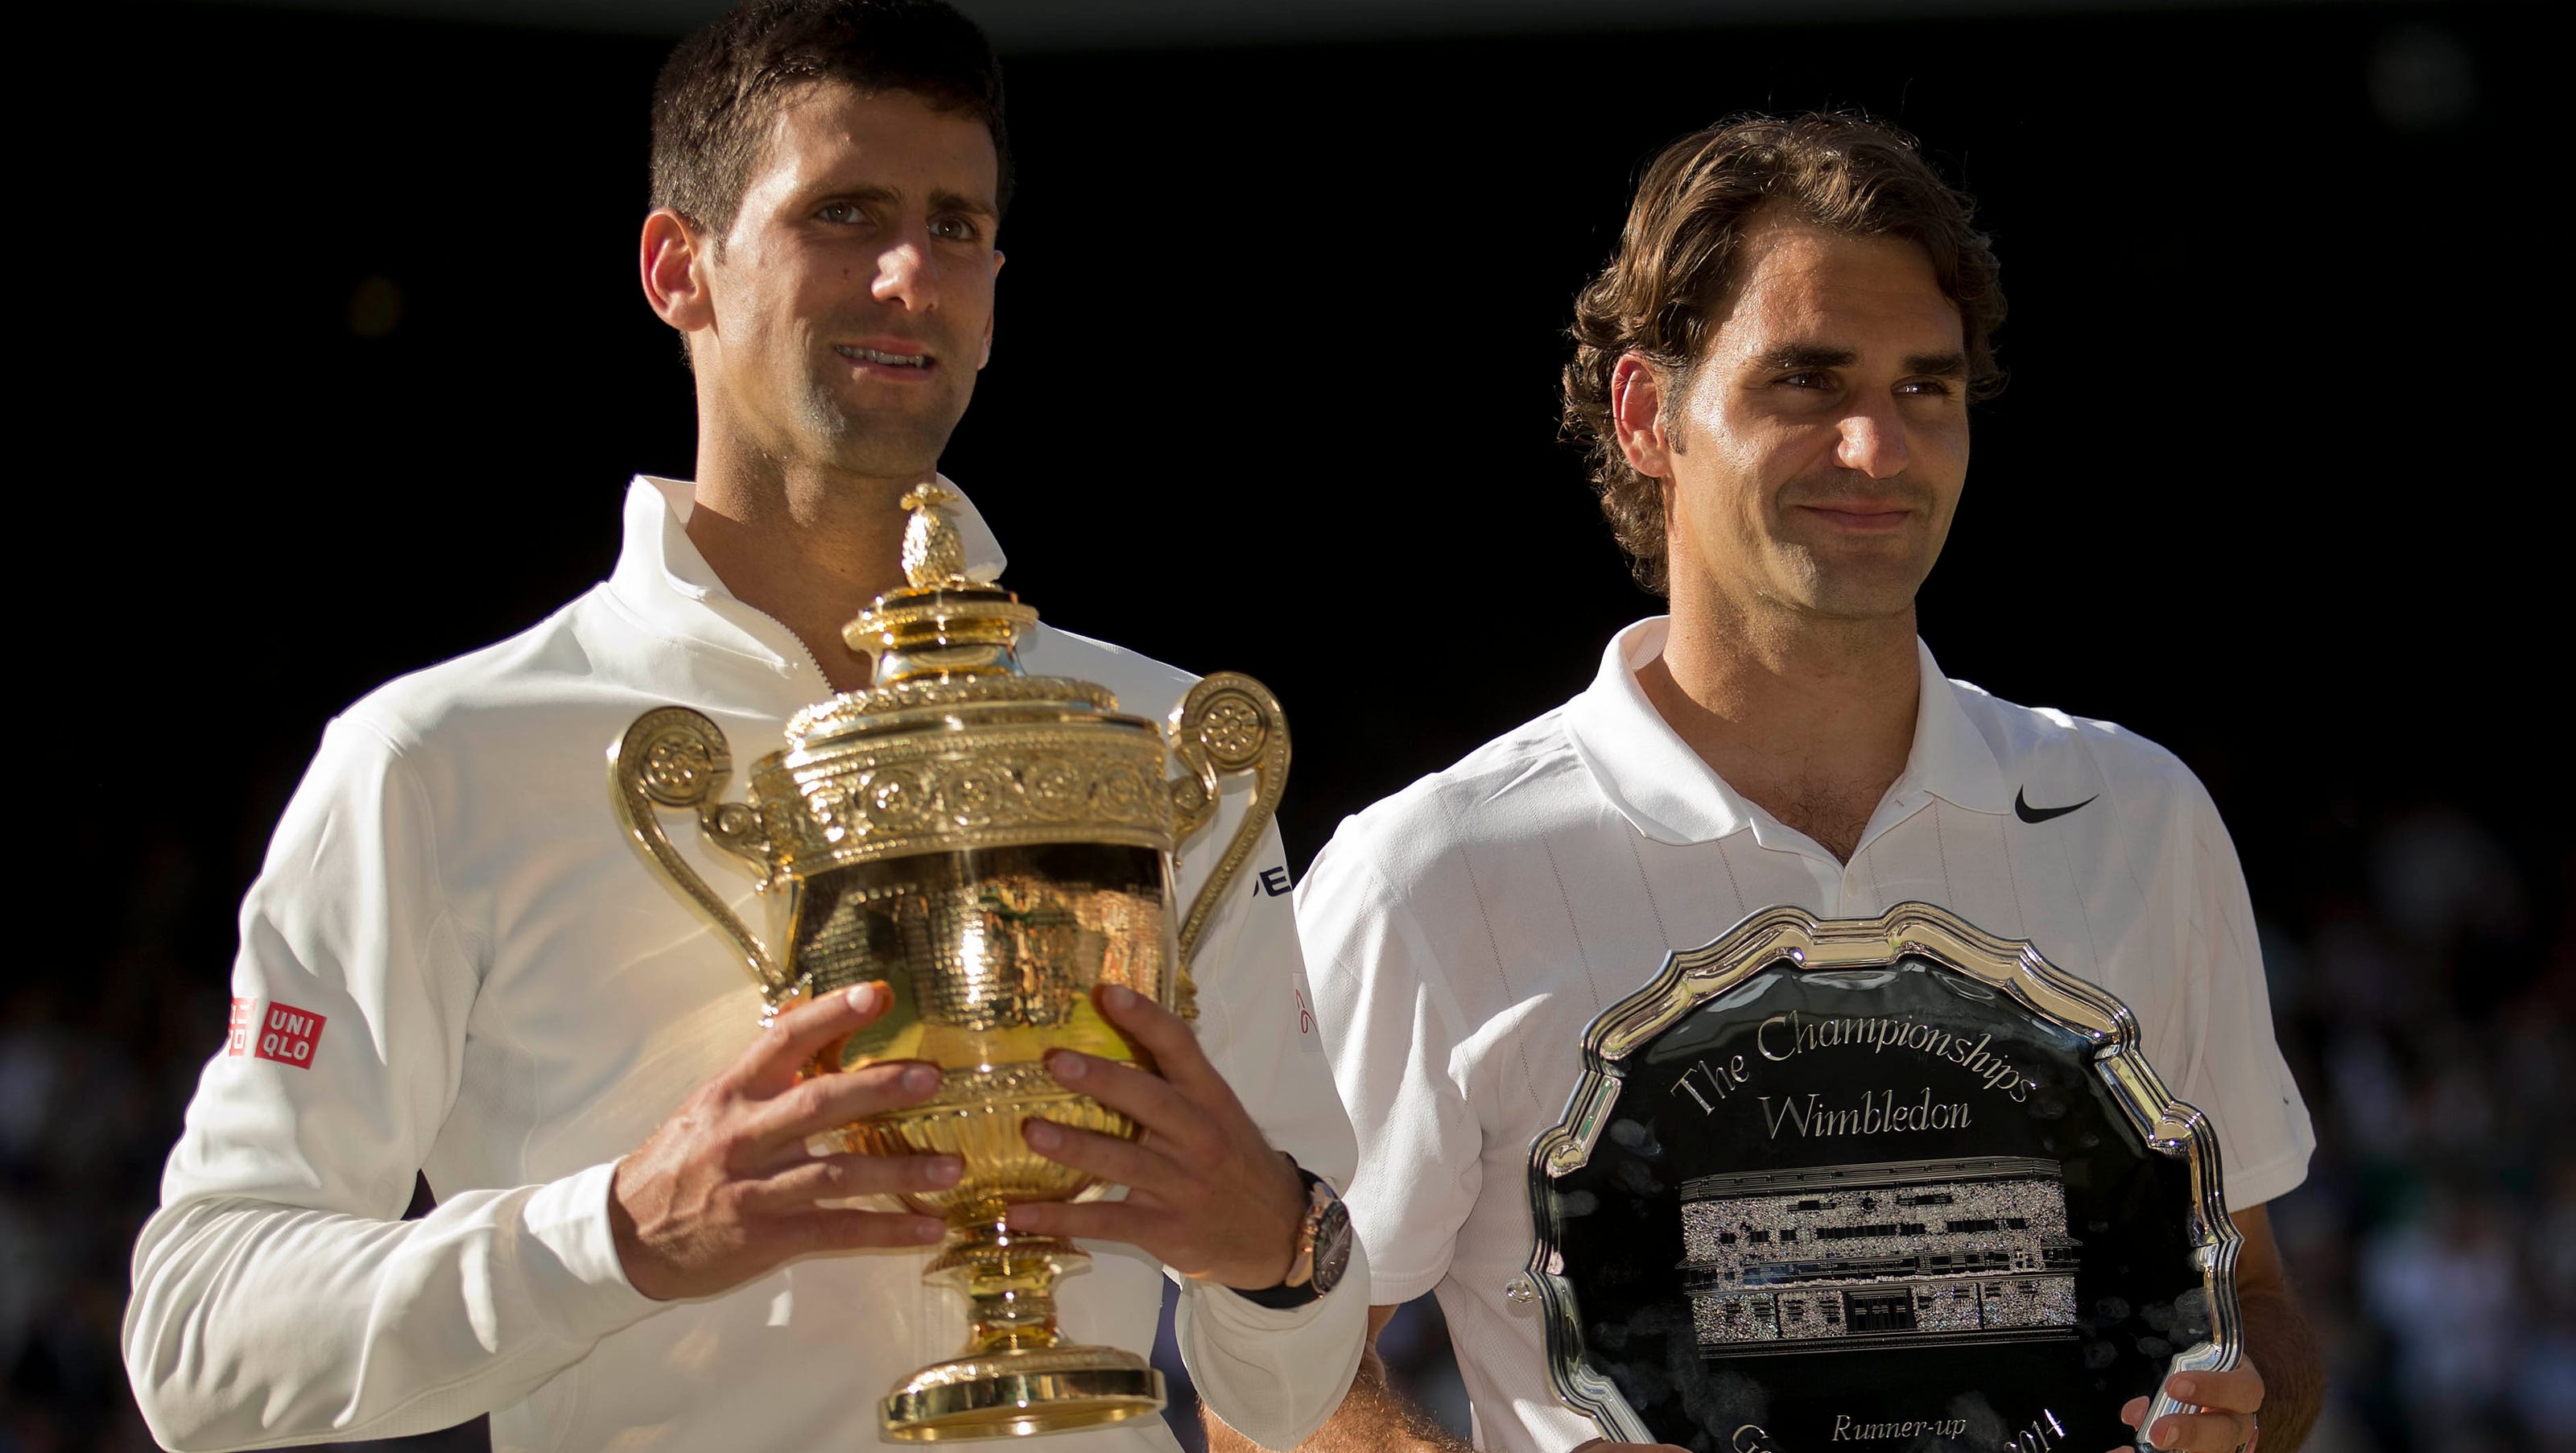 plank Moet ingesteld Novak Djokovic beats Roger Federer at Wimbledon